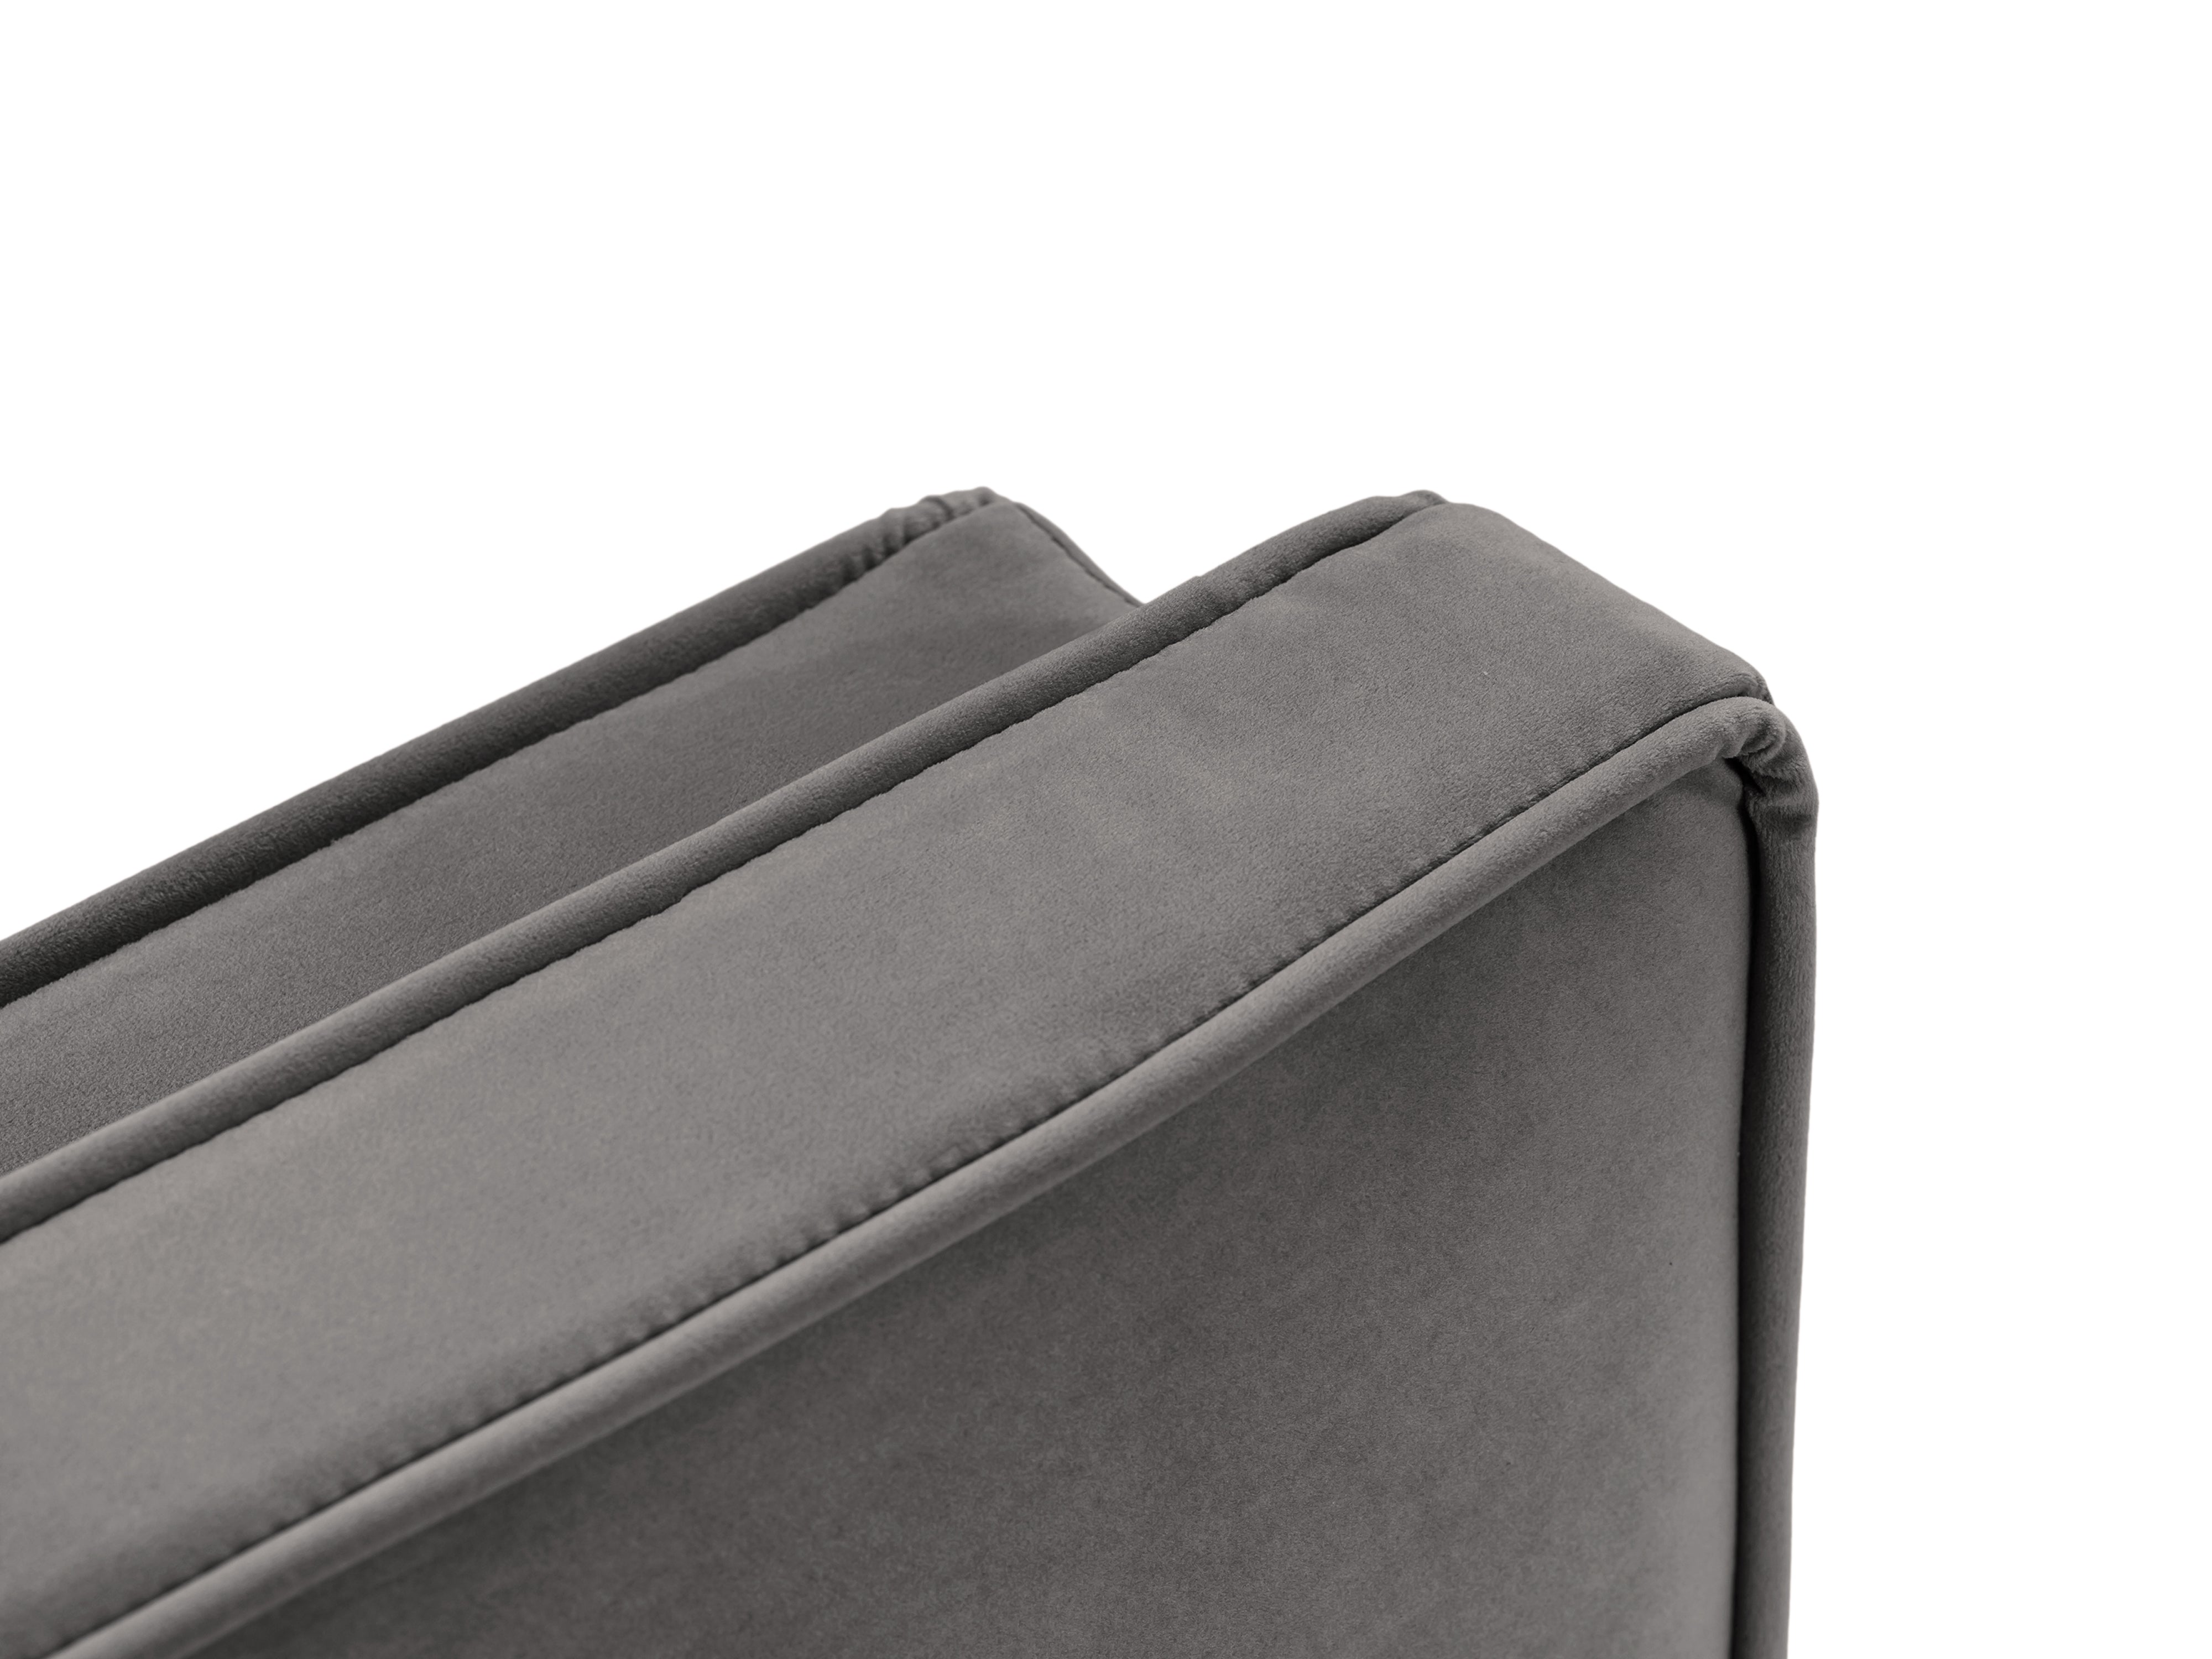 LUIS light grey velvet armchair with black base